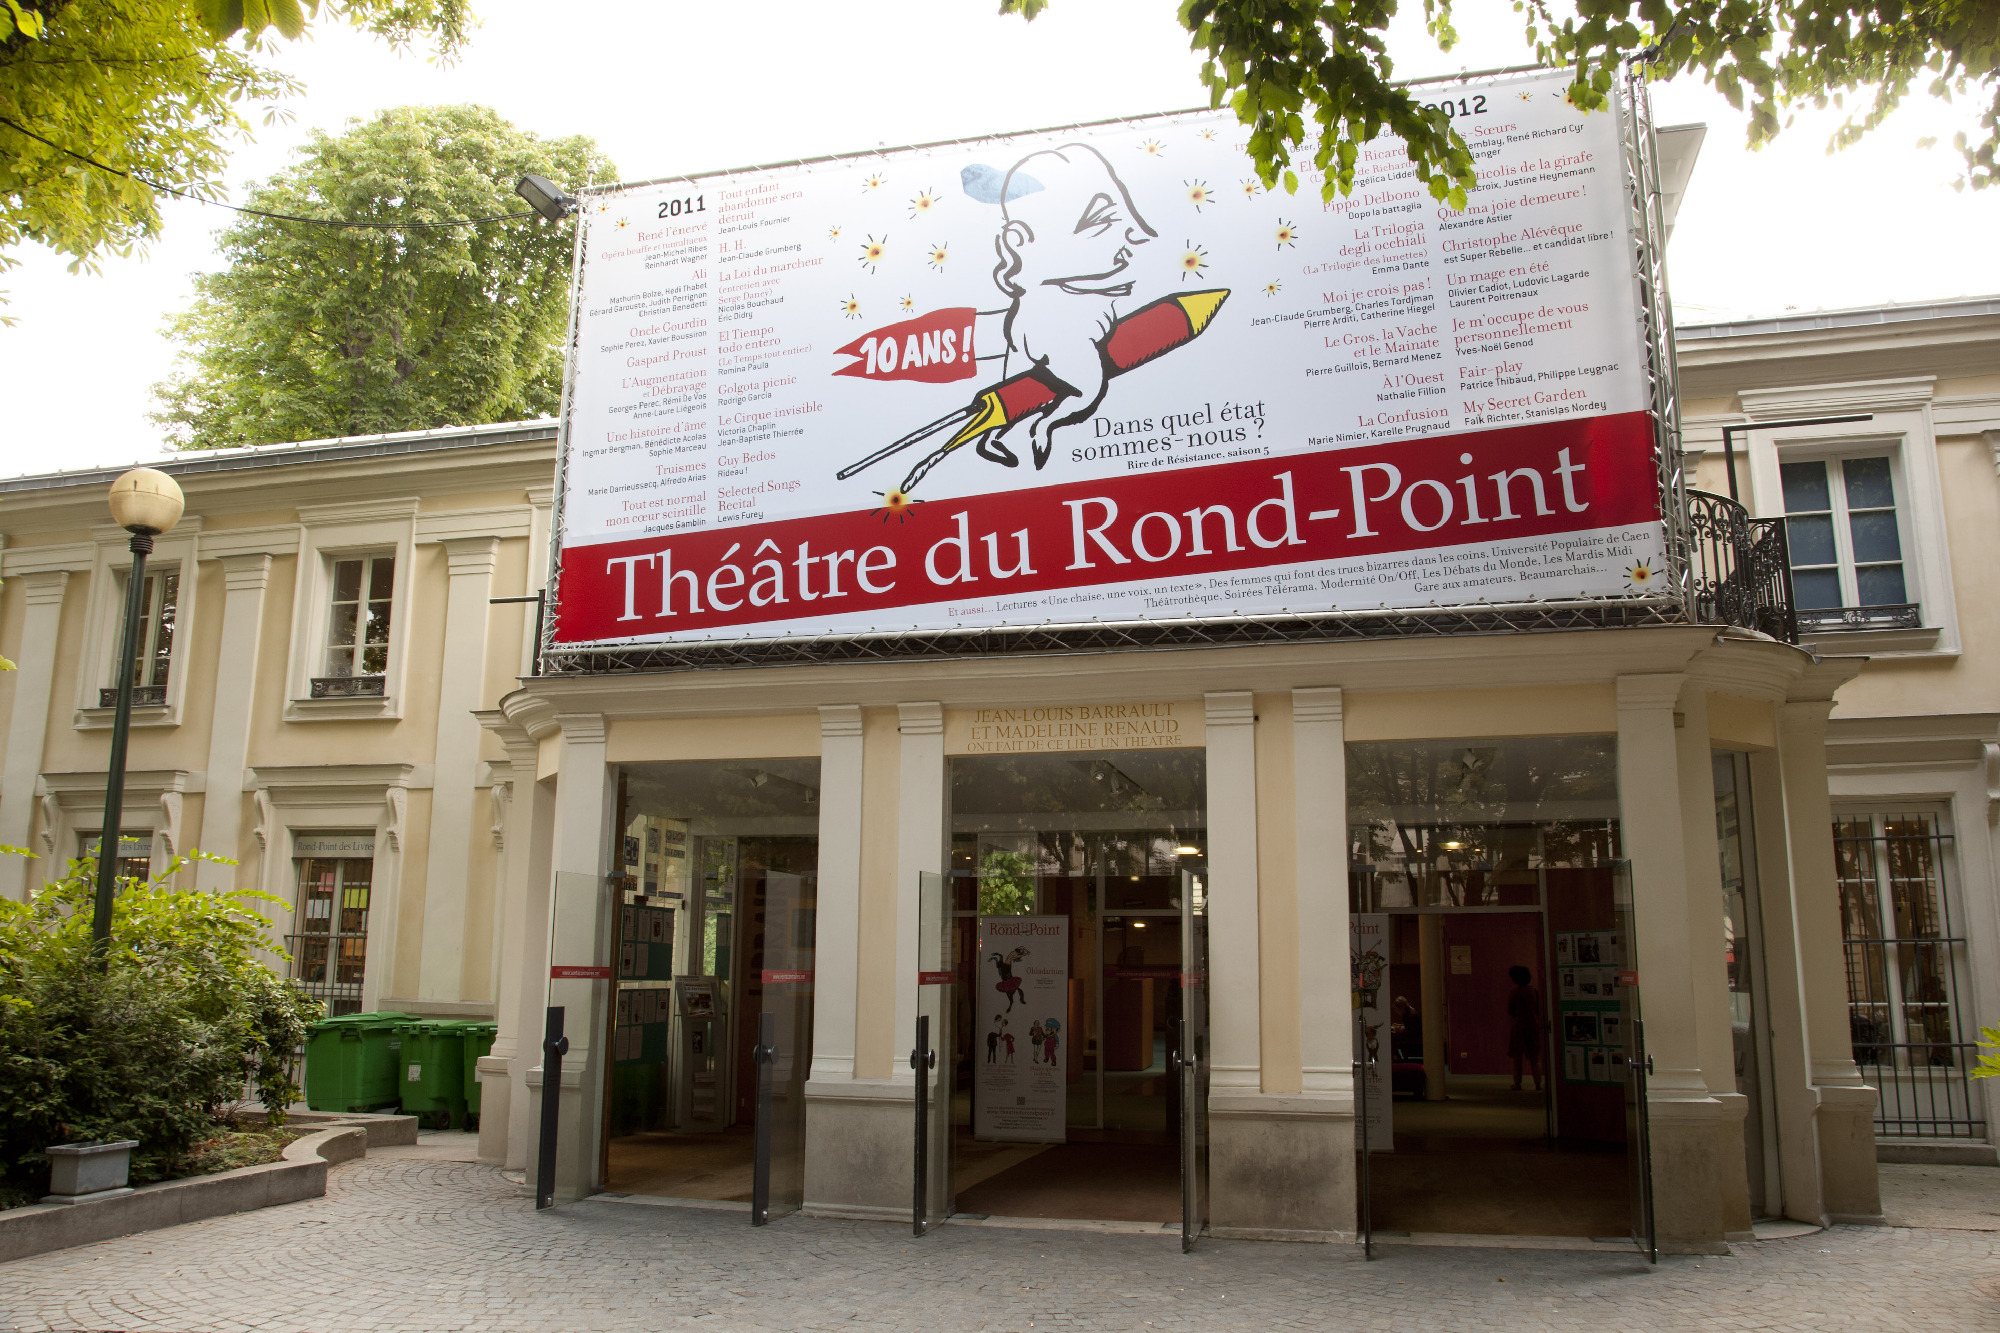 Du theatre. Рон пуэн в Париже. Театр Ронд поинт. Театр Елисейских полей в Париже. Театр точка.